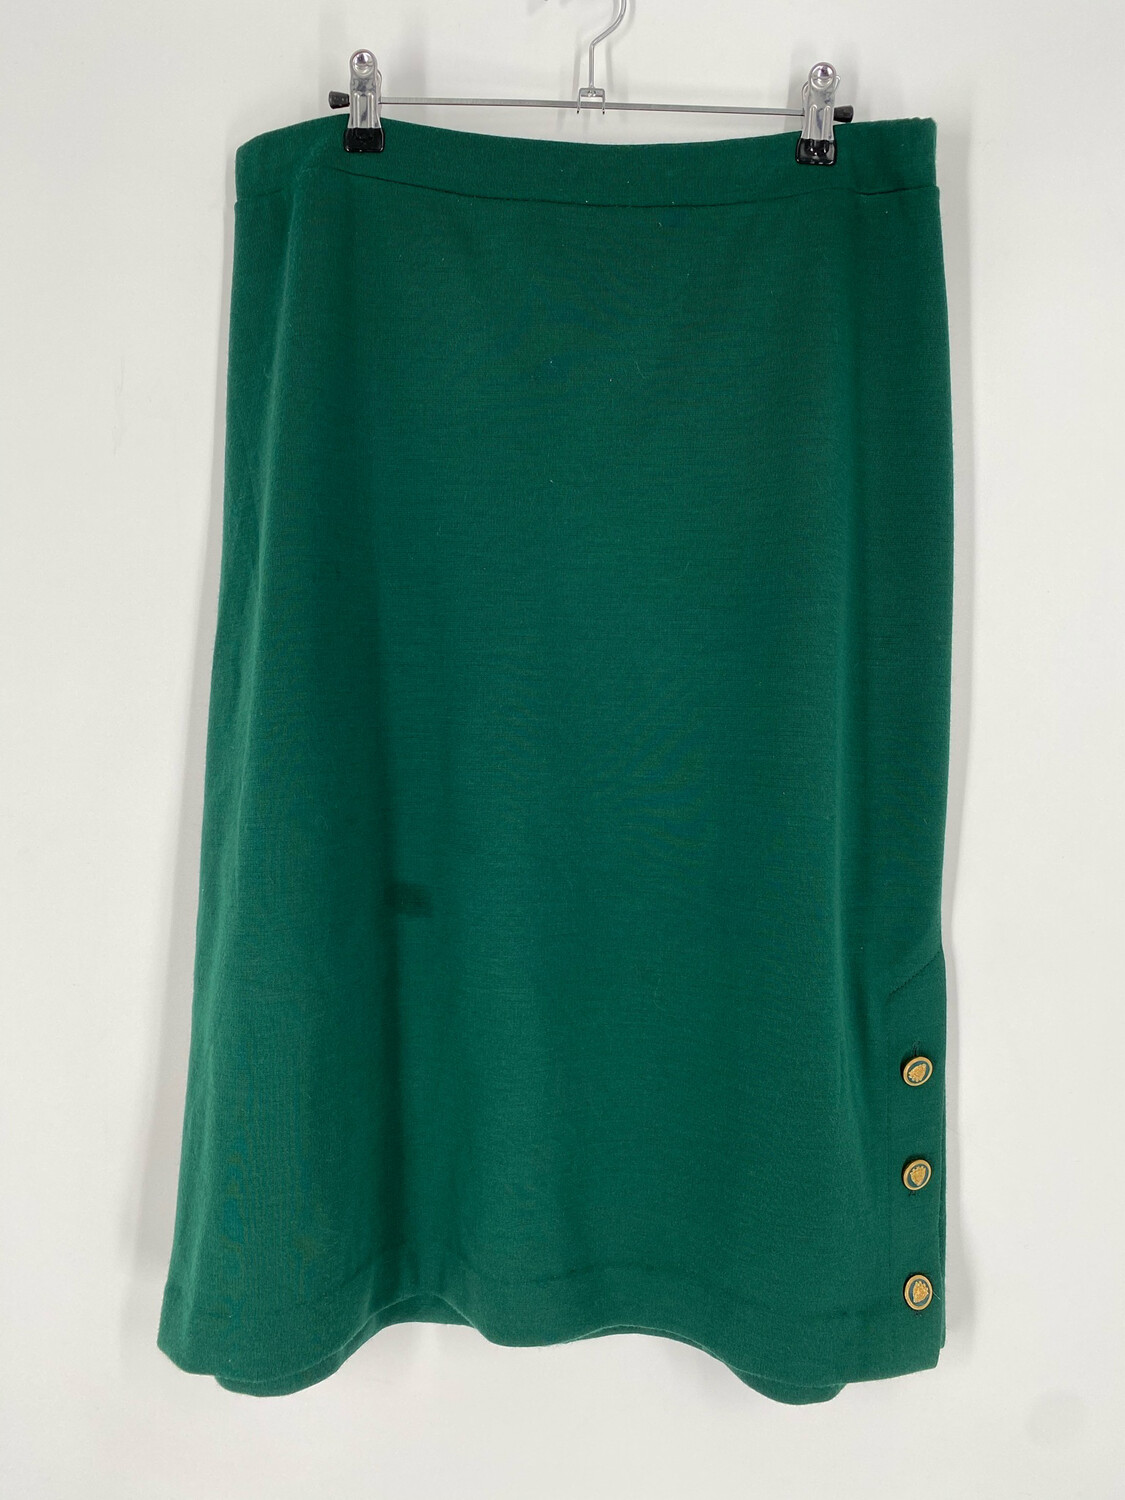 Cape Cod Match Mates Green Vintage Skirt Size 18